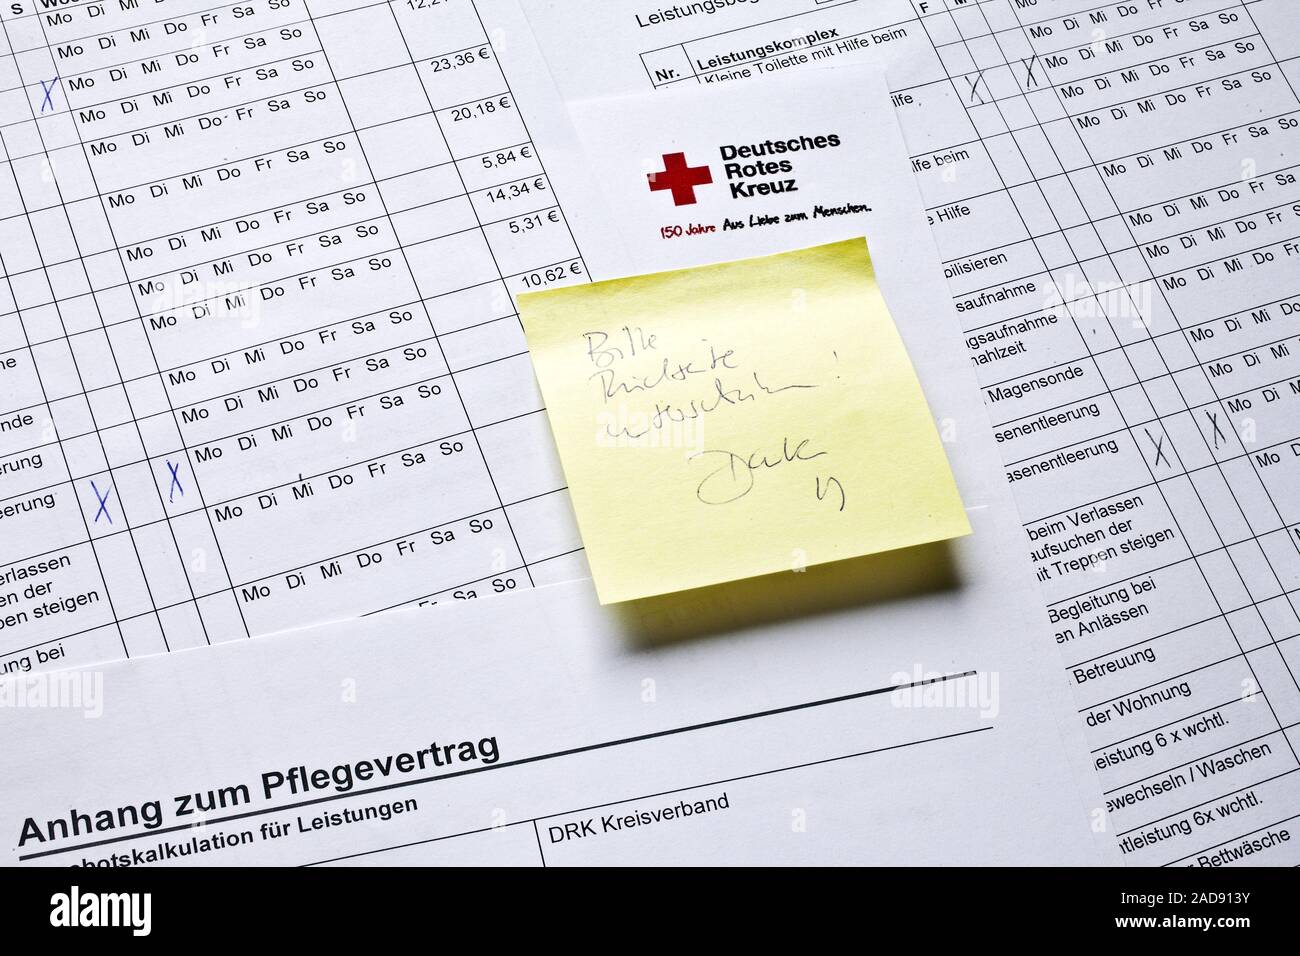 ambulant care contract, Germany Stock Photo